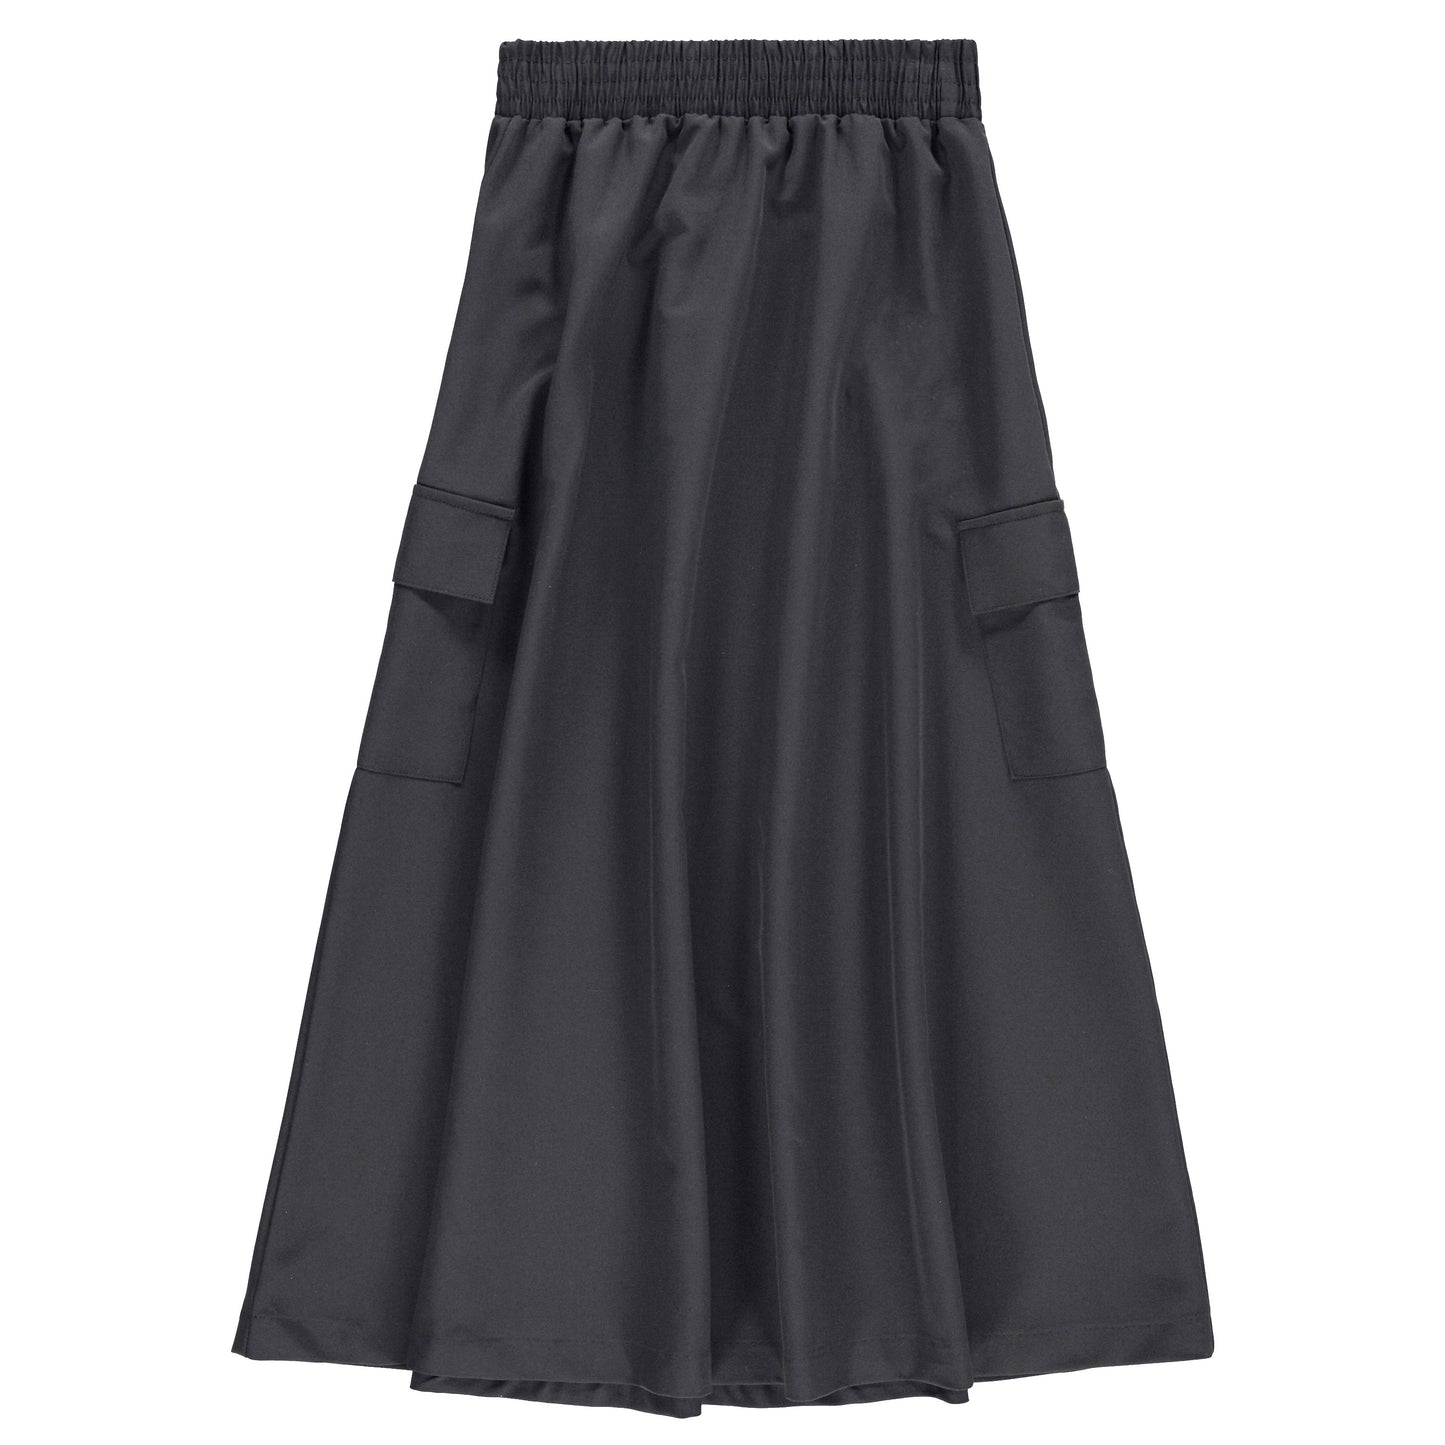 Cargo pocket black midi skirt available in maxi length as well